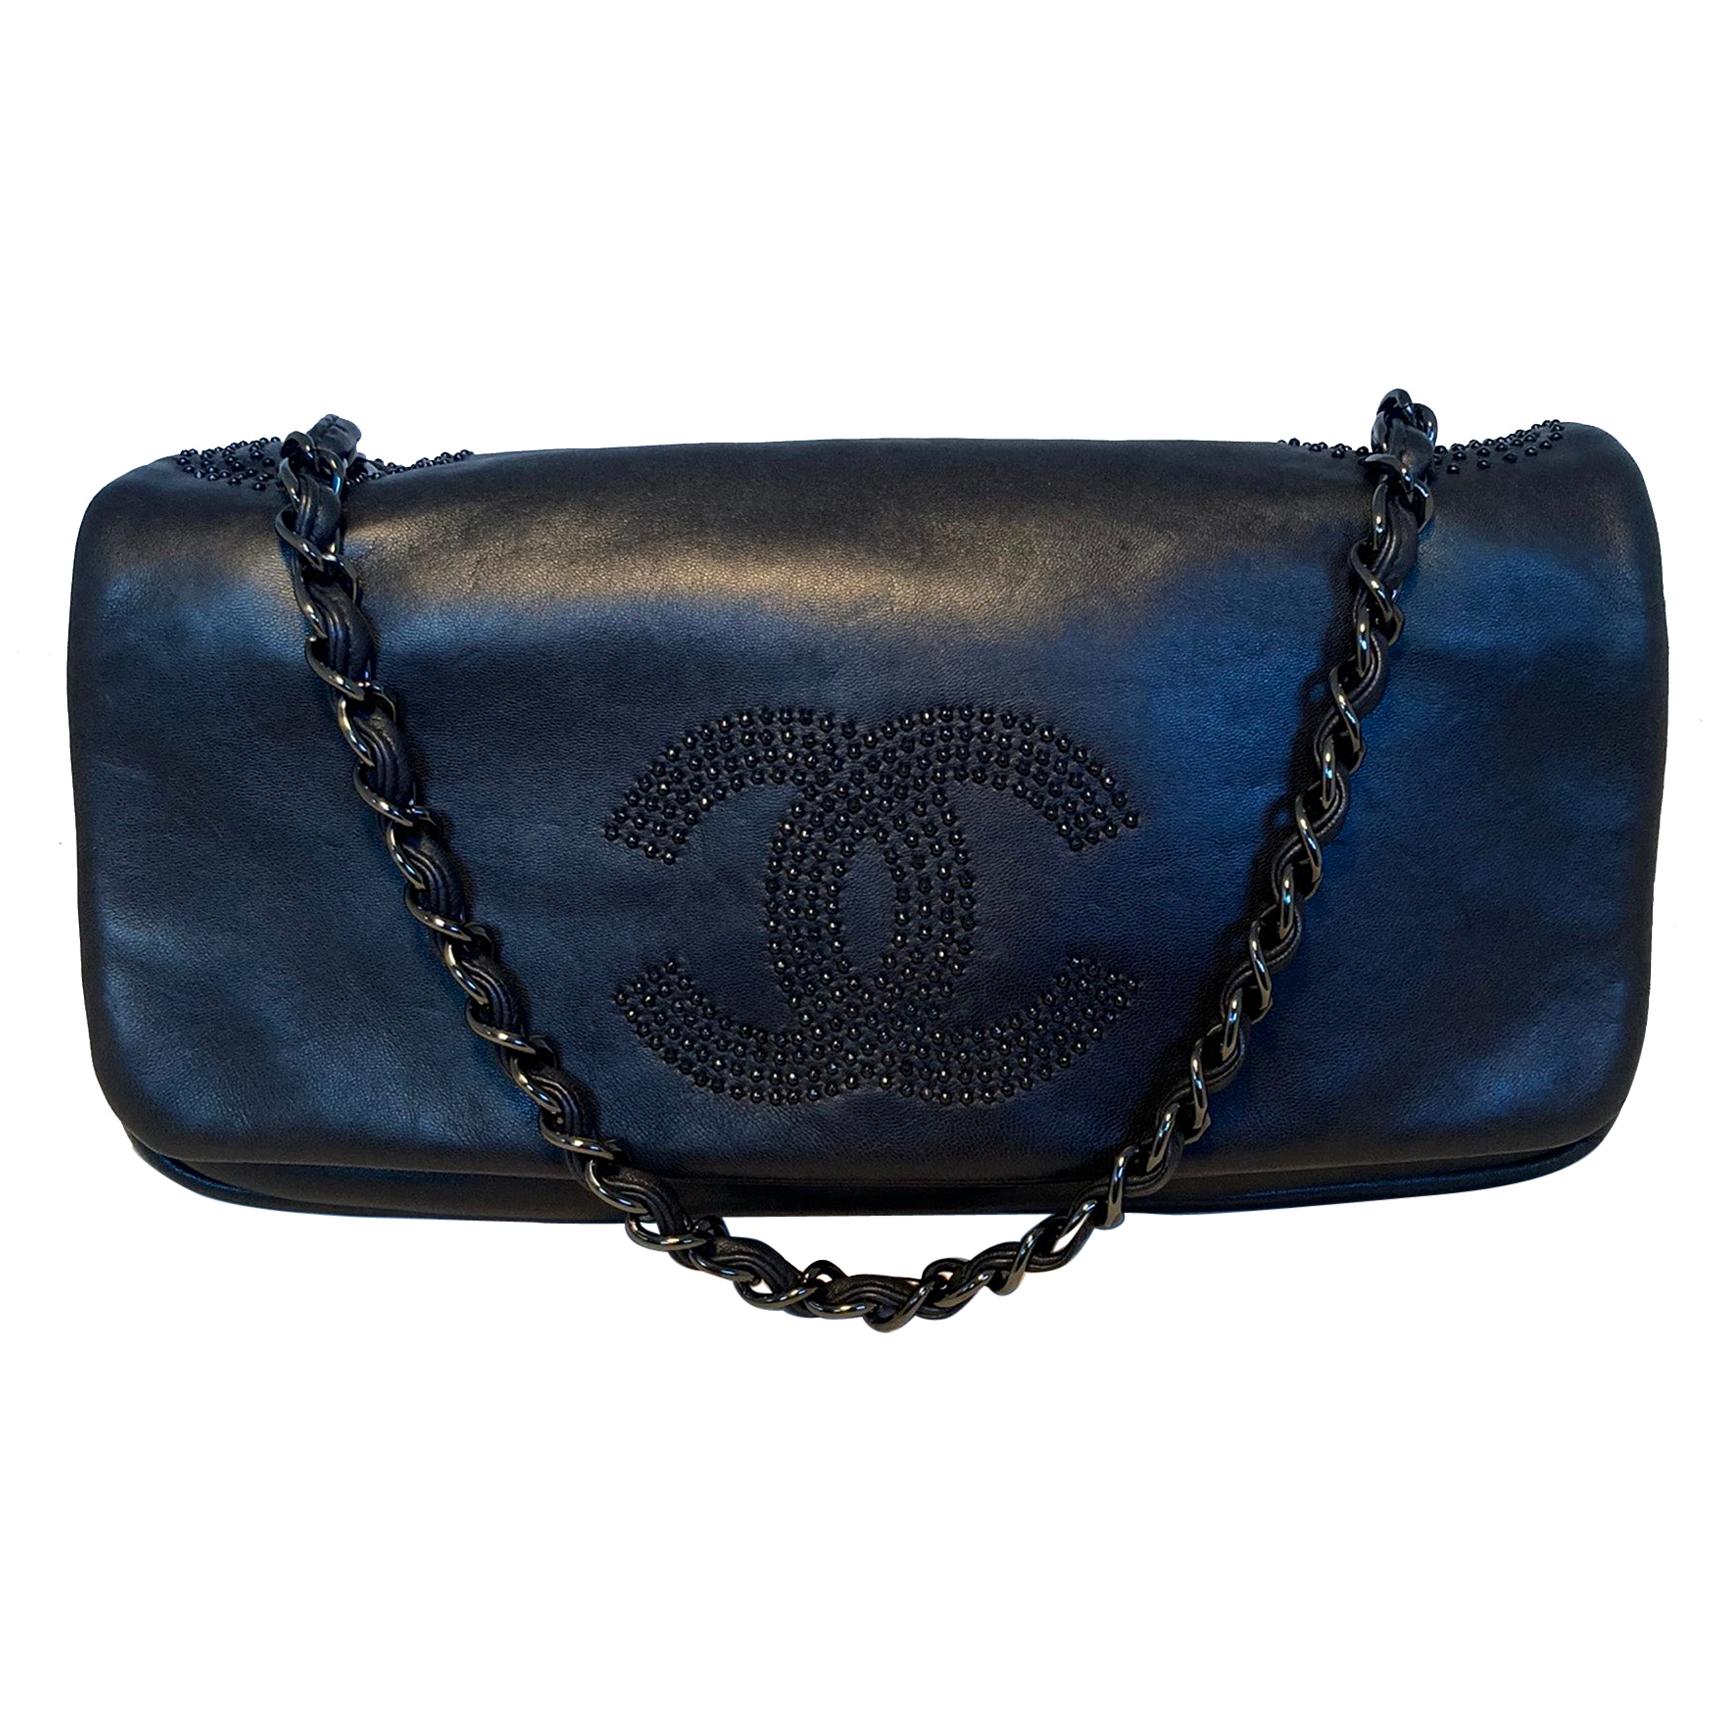 Chanel Black Leather Beaded CC Top Flap Classic Shoulder Bag